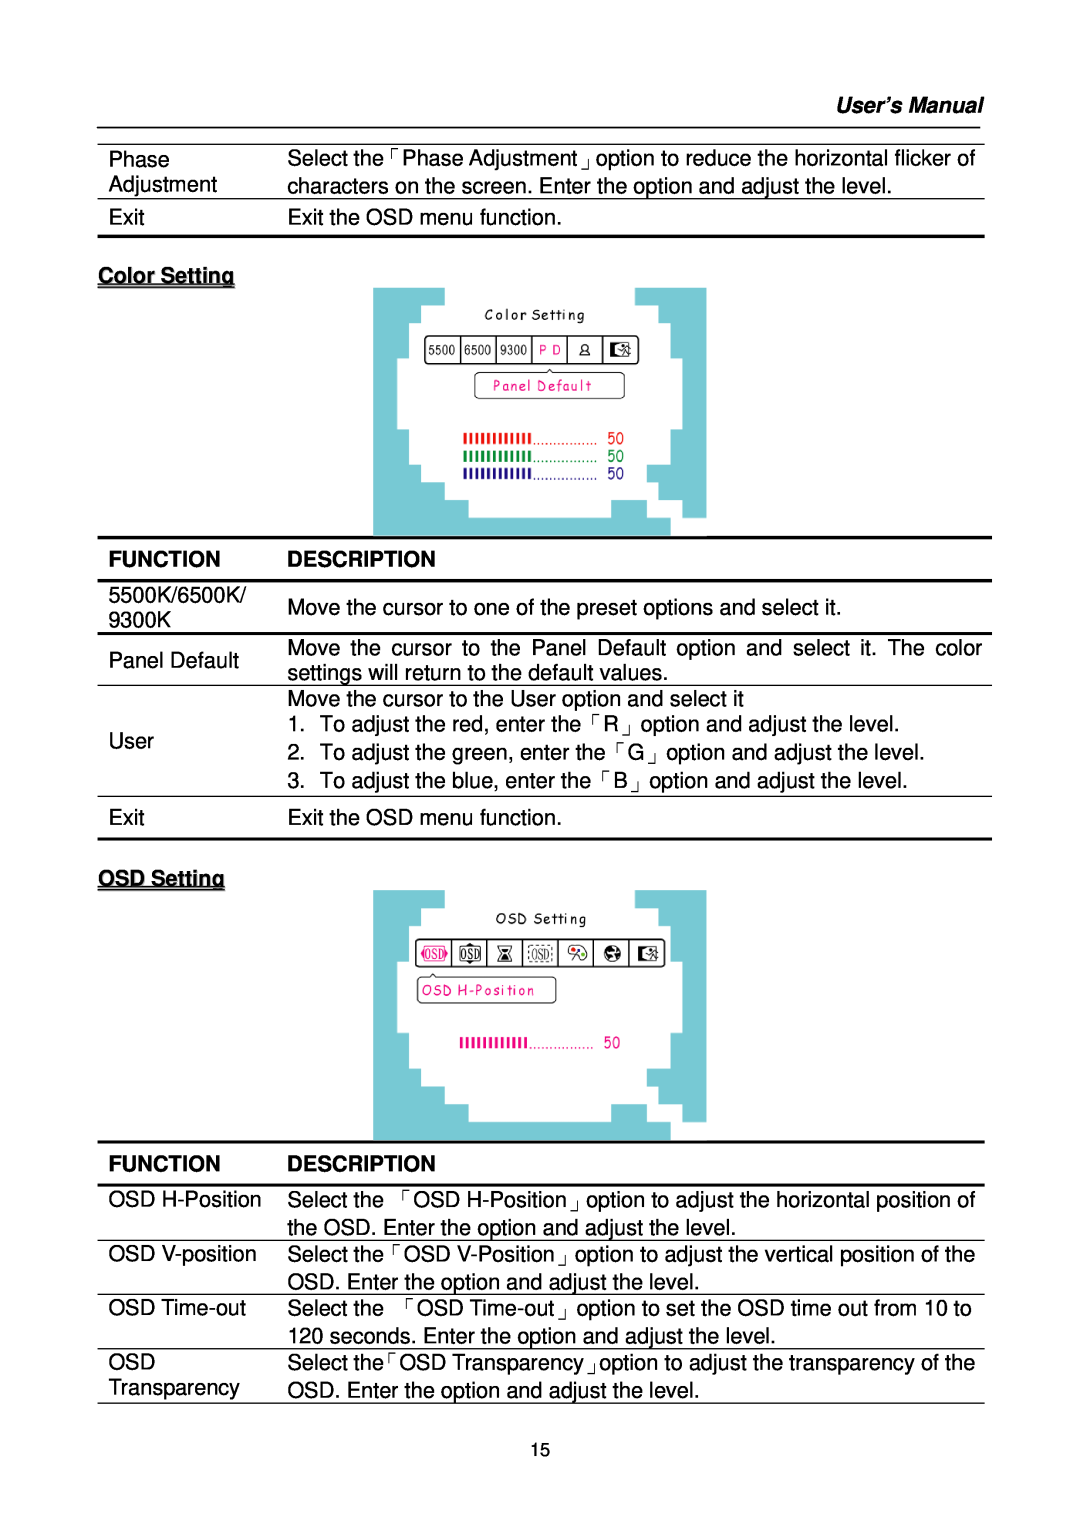 Hanns.G HC19 Series user manual User’s Manual, Color Setting FUNCTION, Description, OSD Setting, Function 